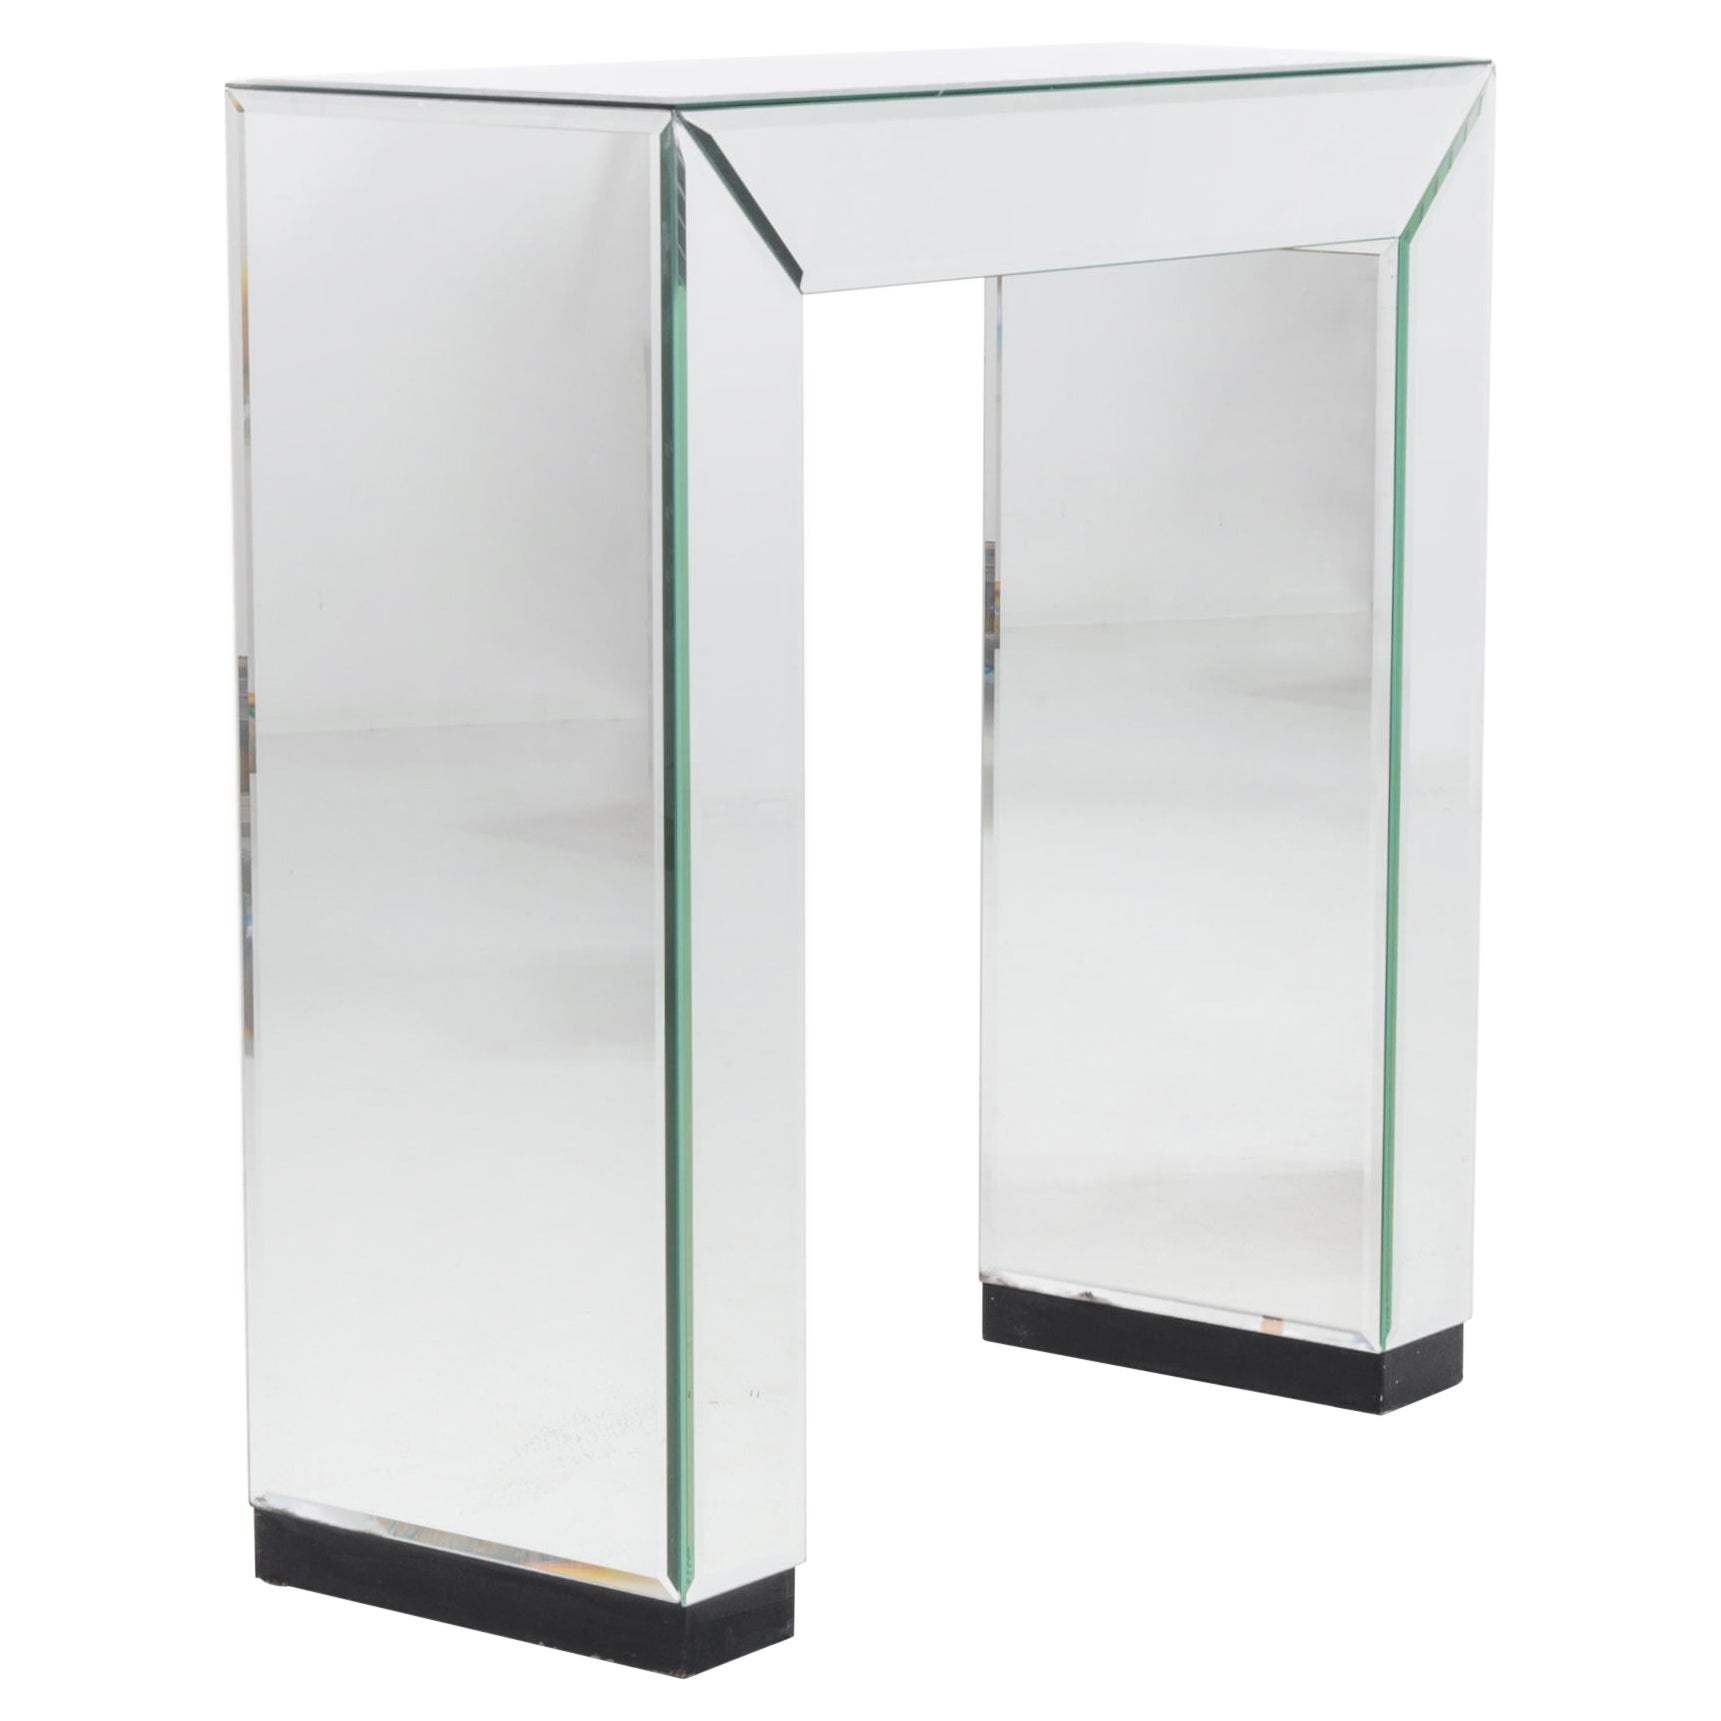 1970s Italian Mirrored Glass Console Table